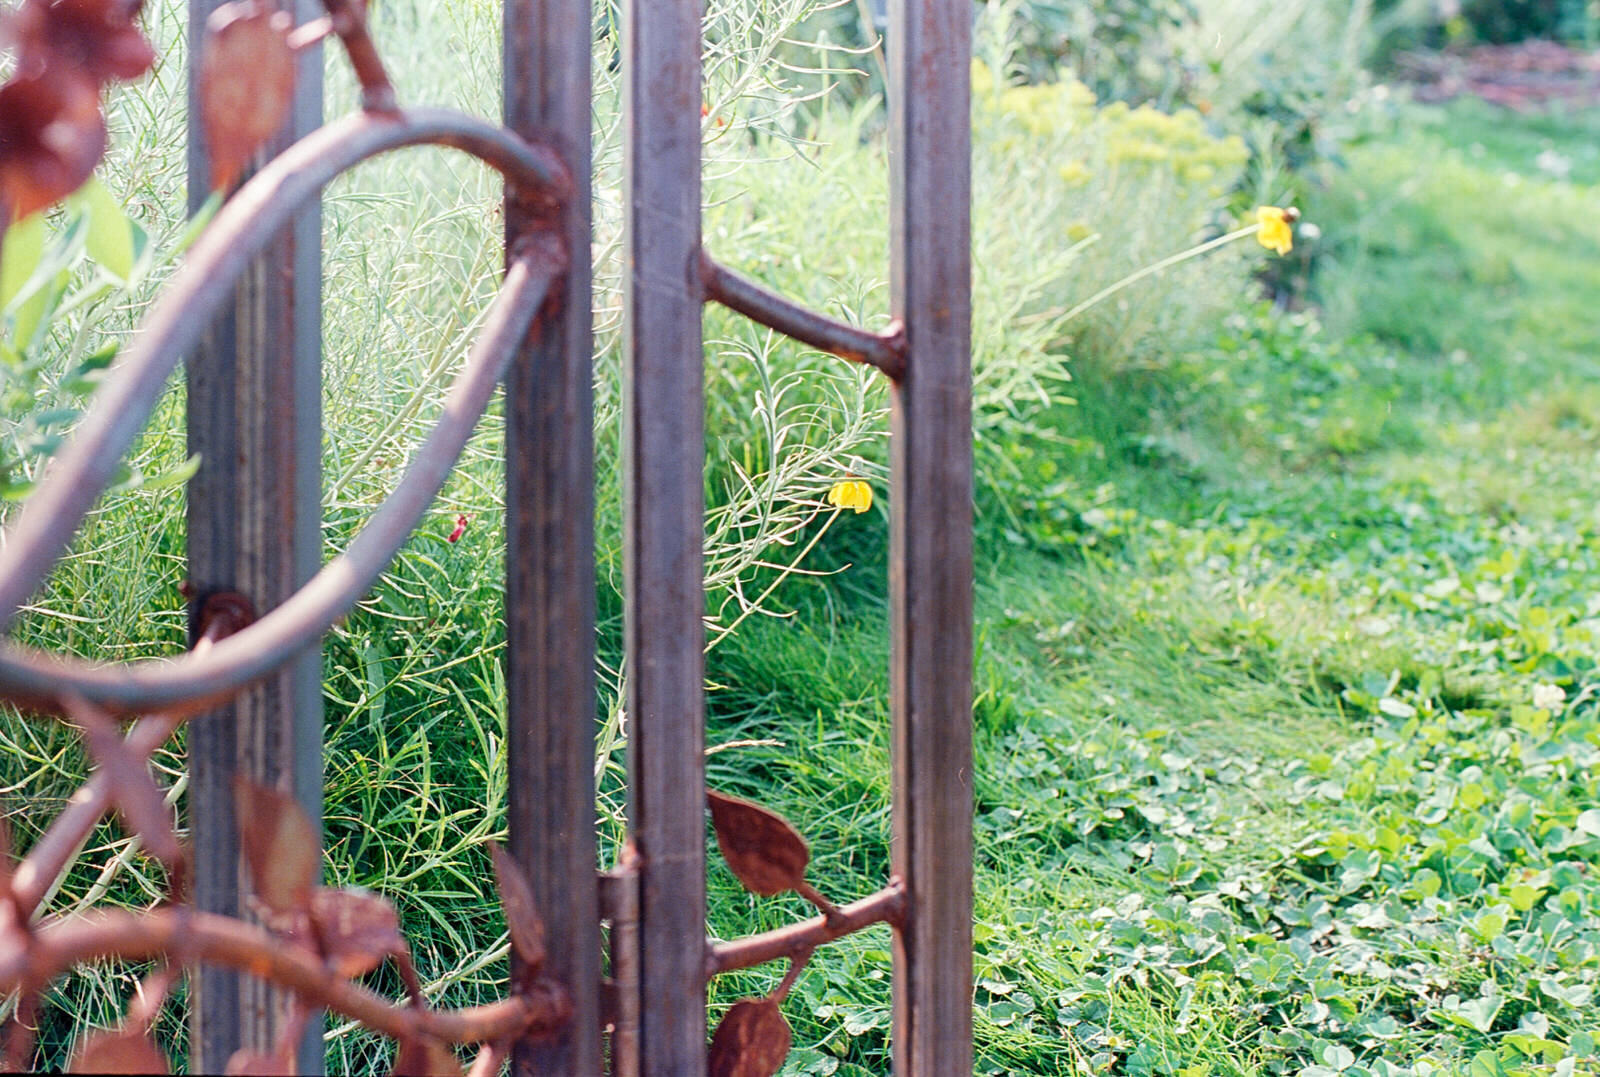 Secret garden...through an open fence...